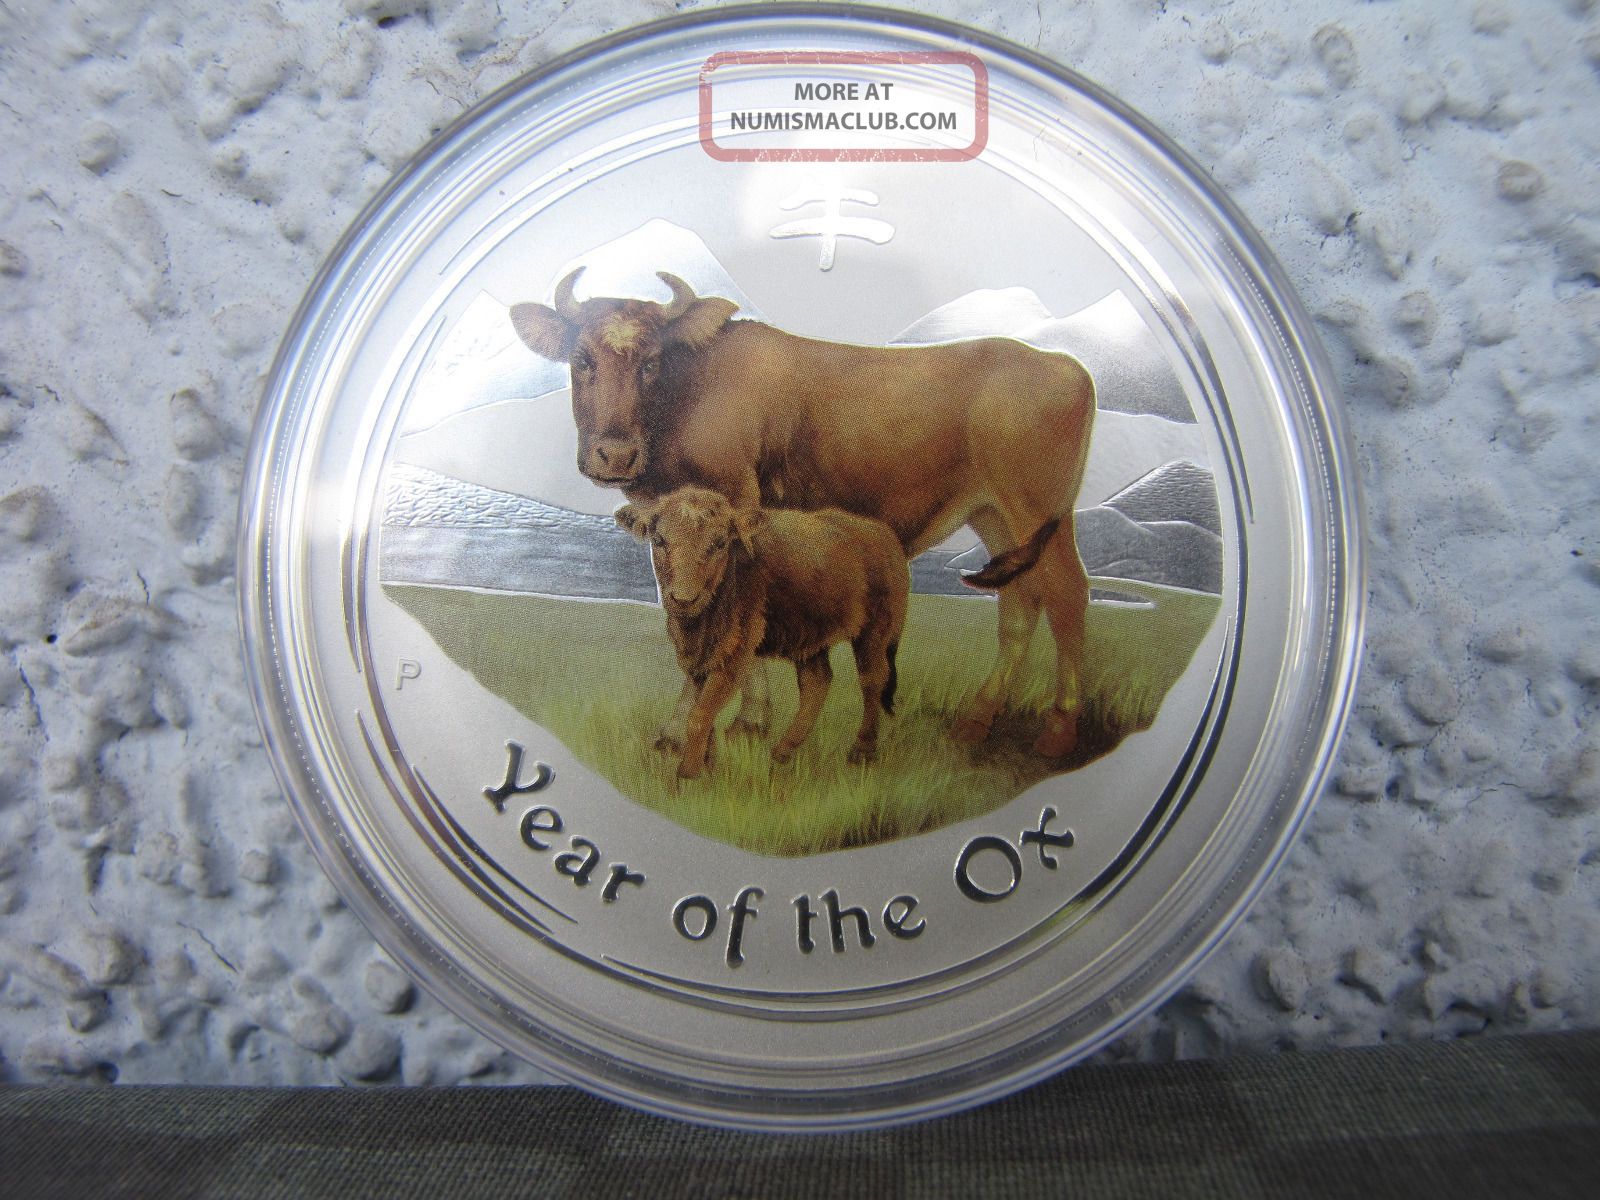 2009 Perth Year Of The Ox 2 Oz.  999 Silver Coin Colored Australia photo